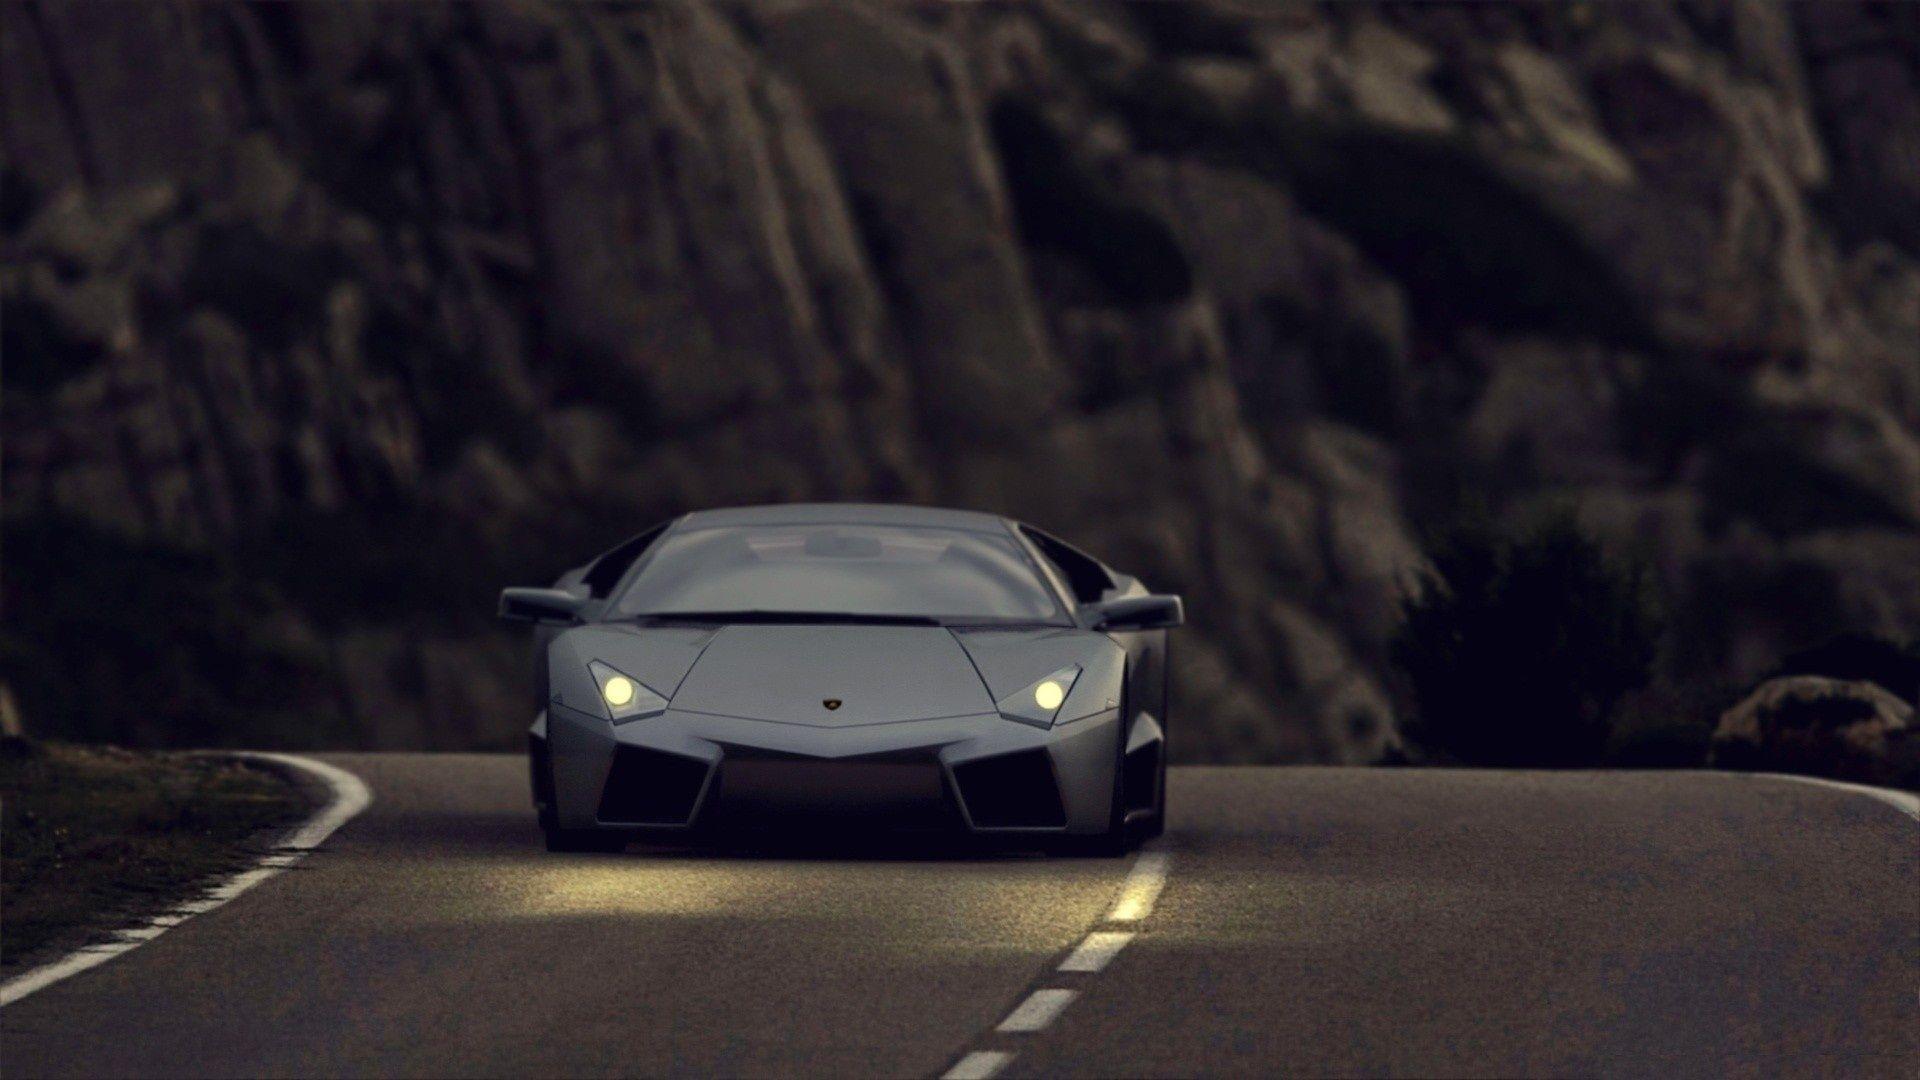 Lamborghini Dark wallpaper HD. Wallpaper, Background, Image